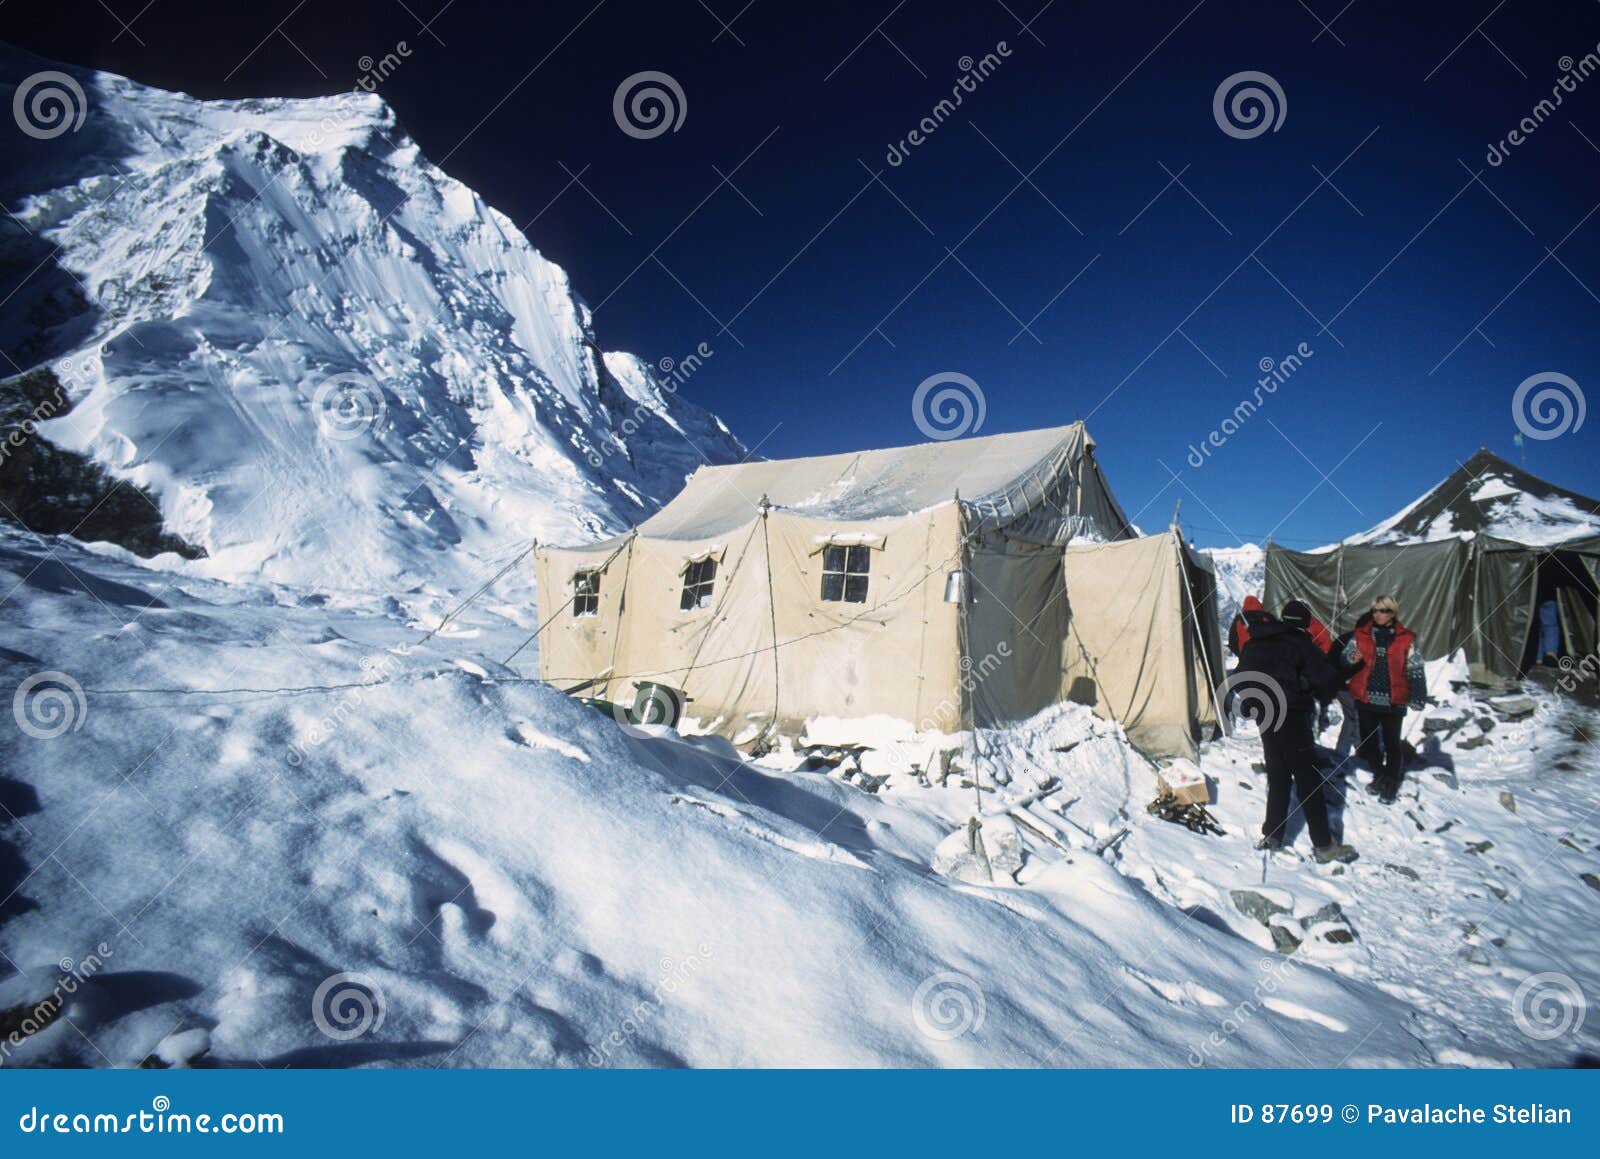 base camp of khan tengri - tien shan